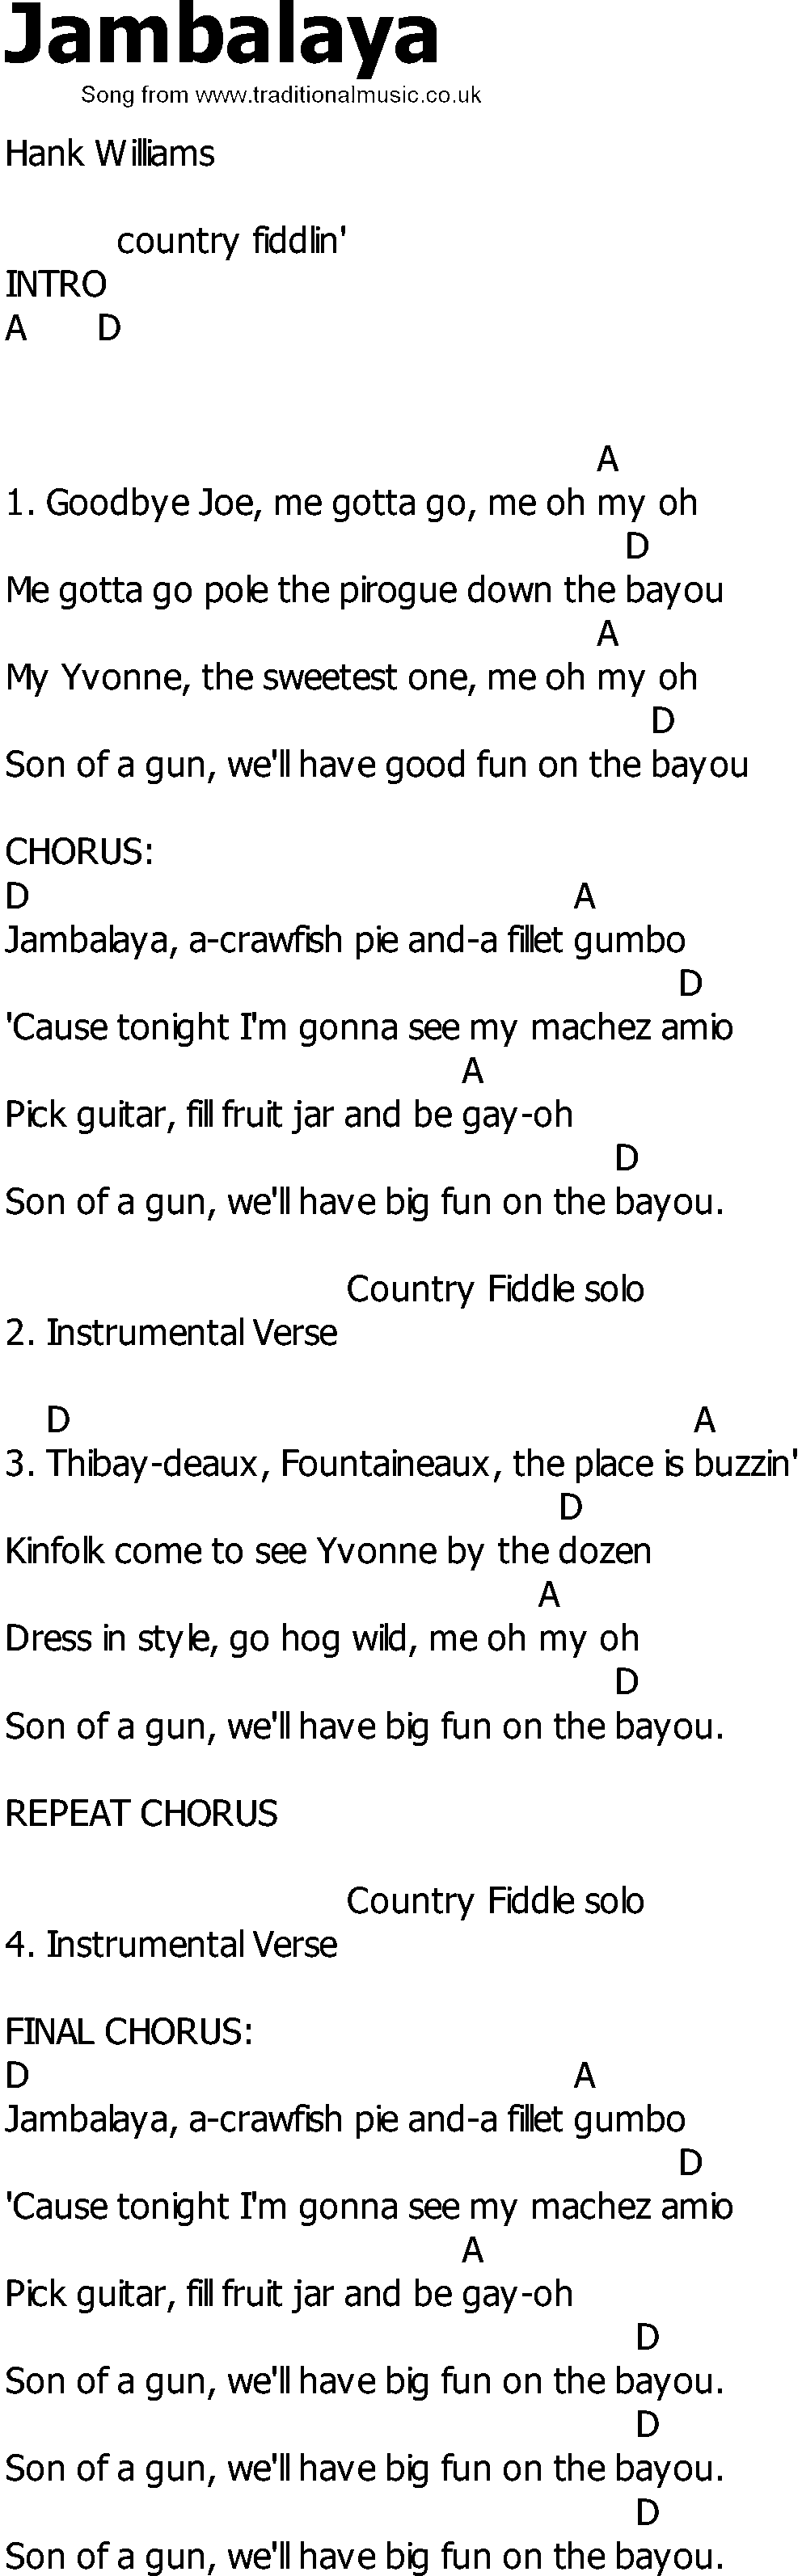 Old Country song lyrics with chords - Jambalaya